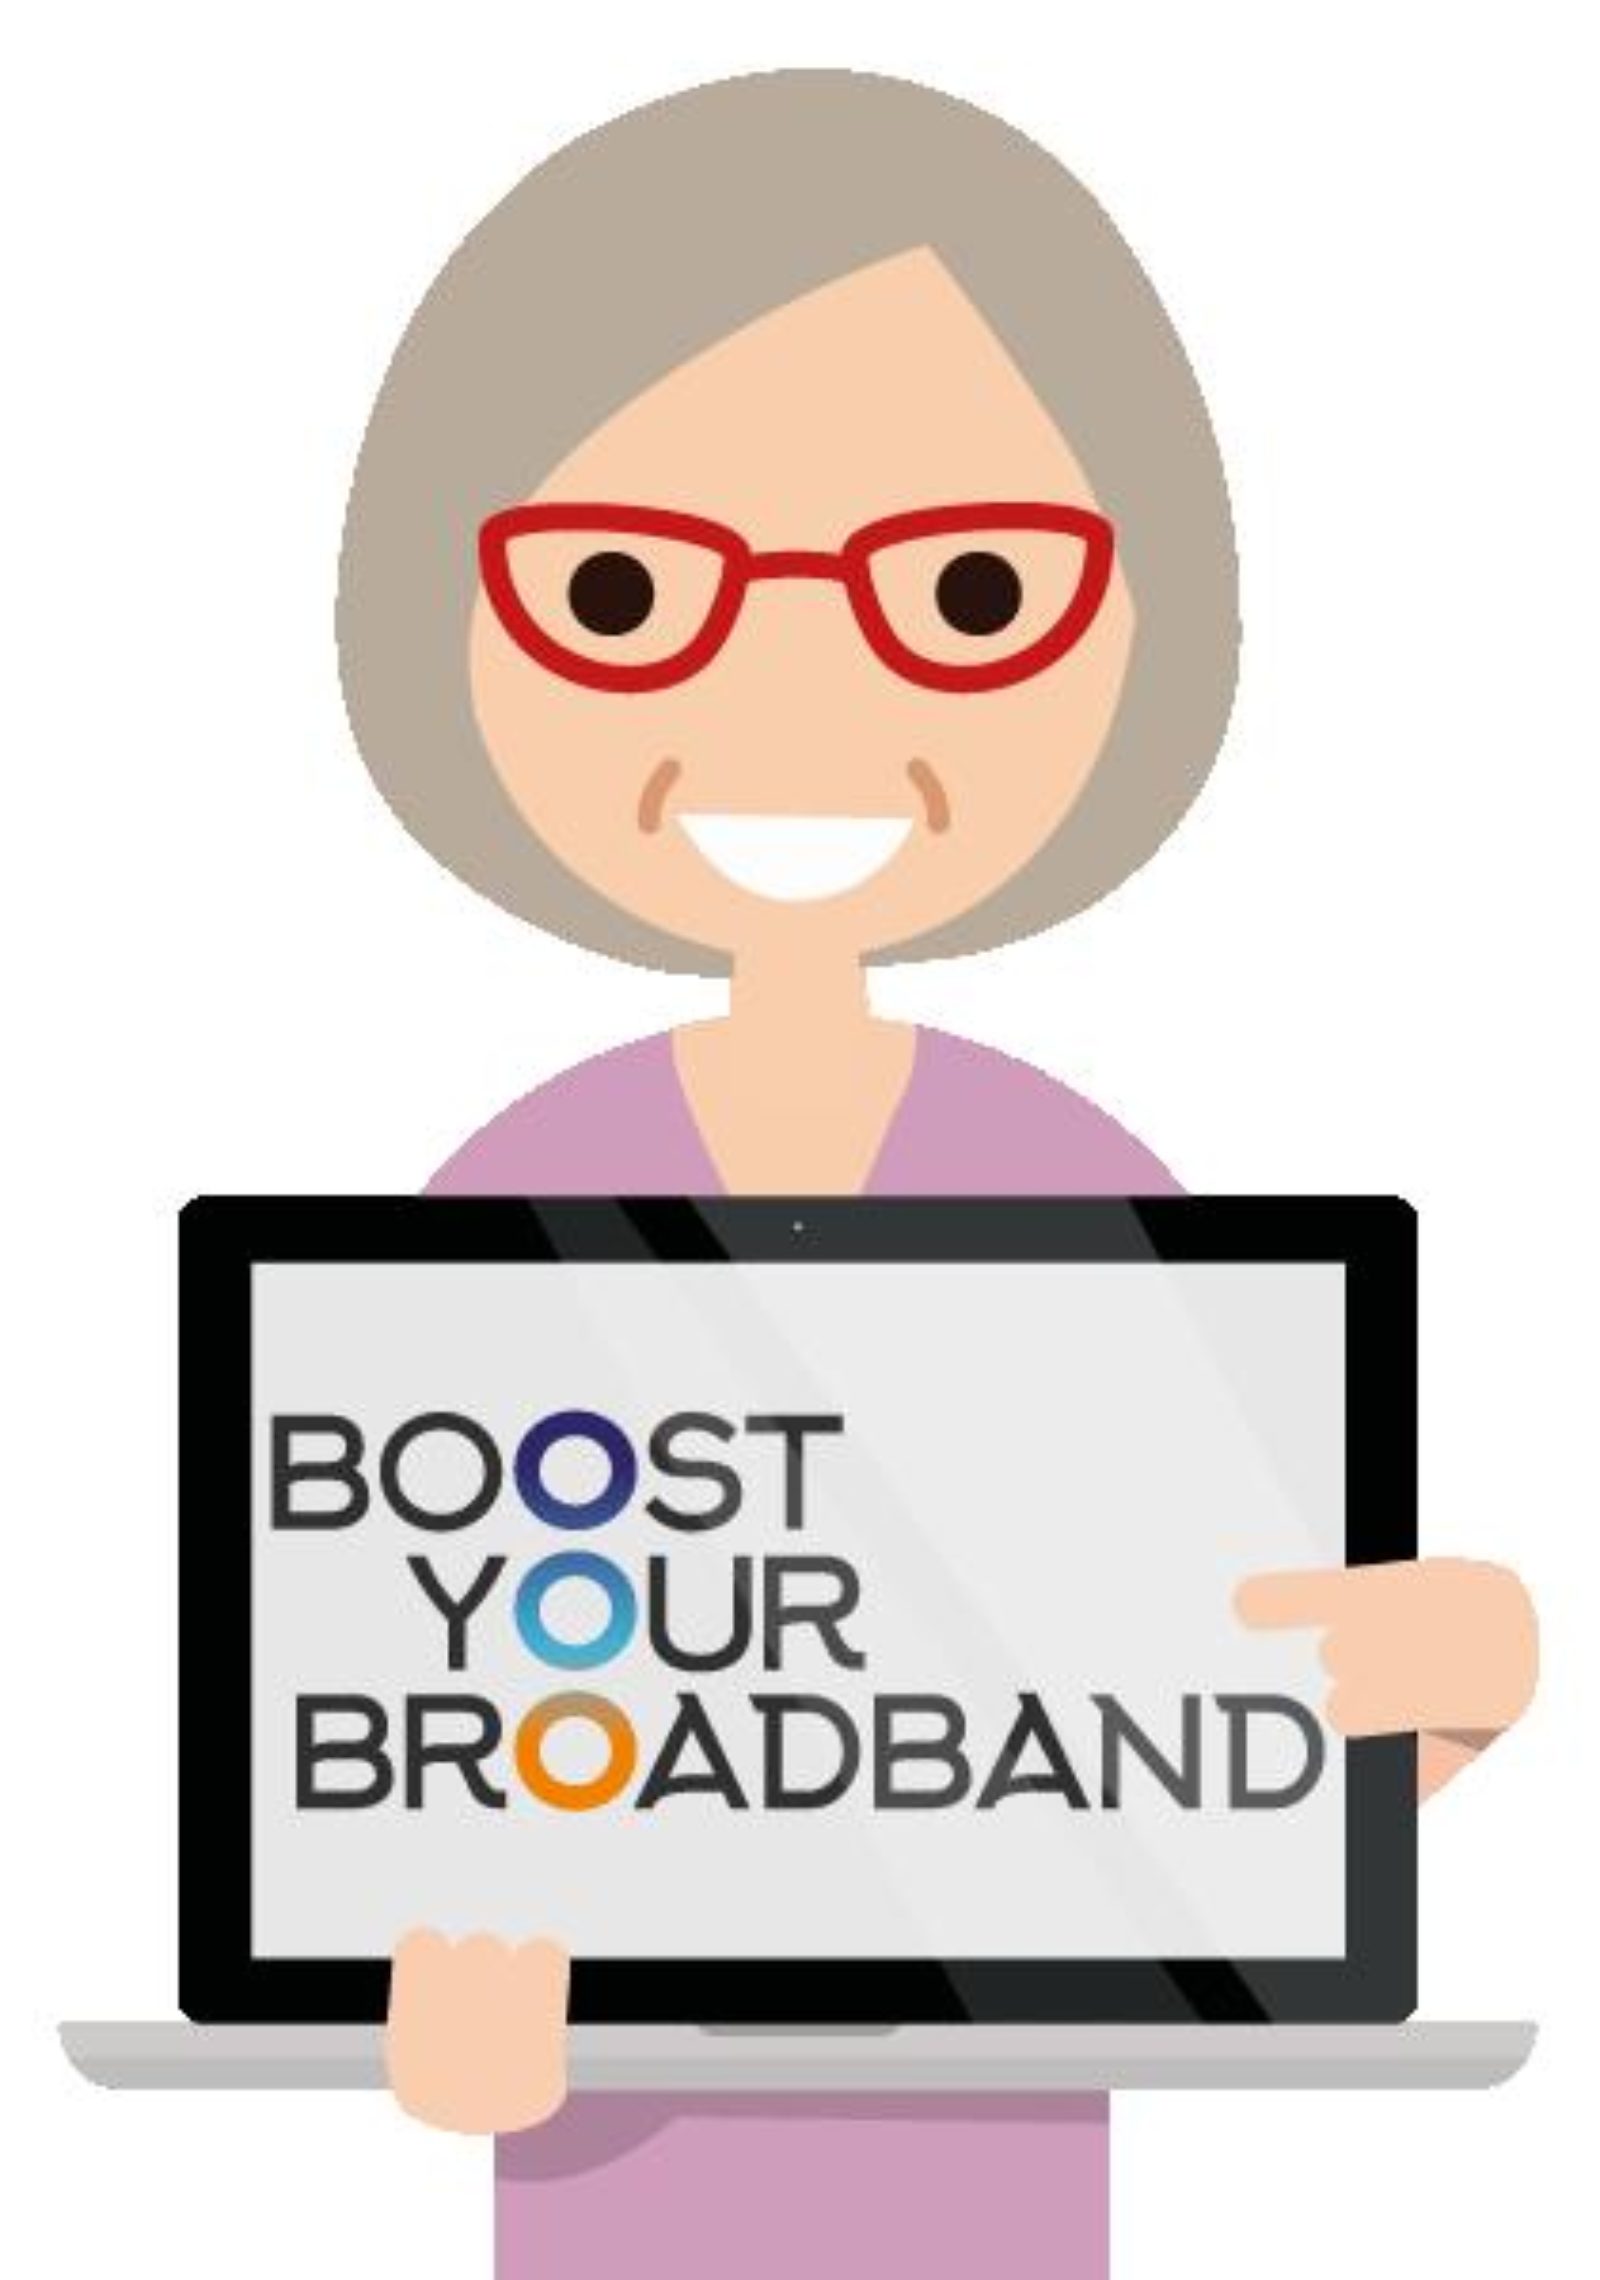 Boost your broadband